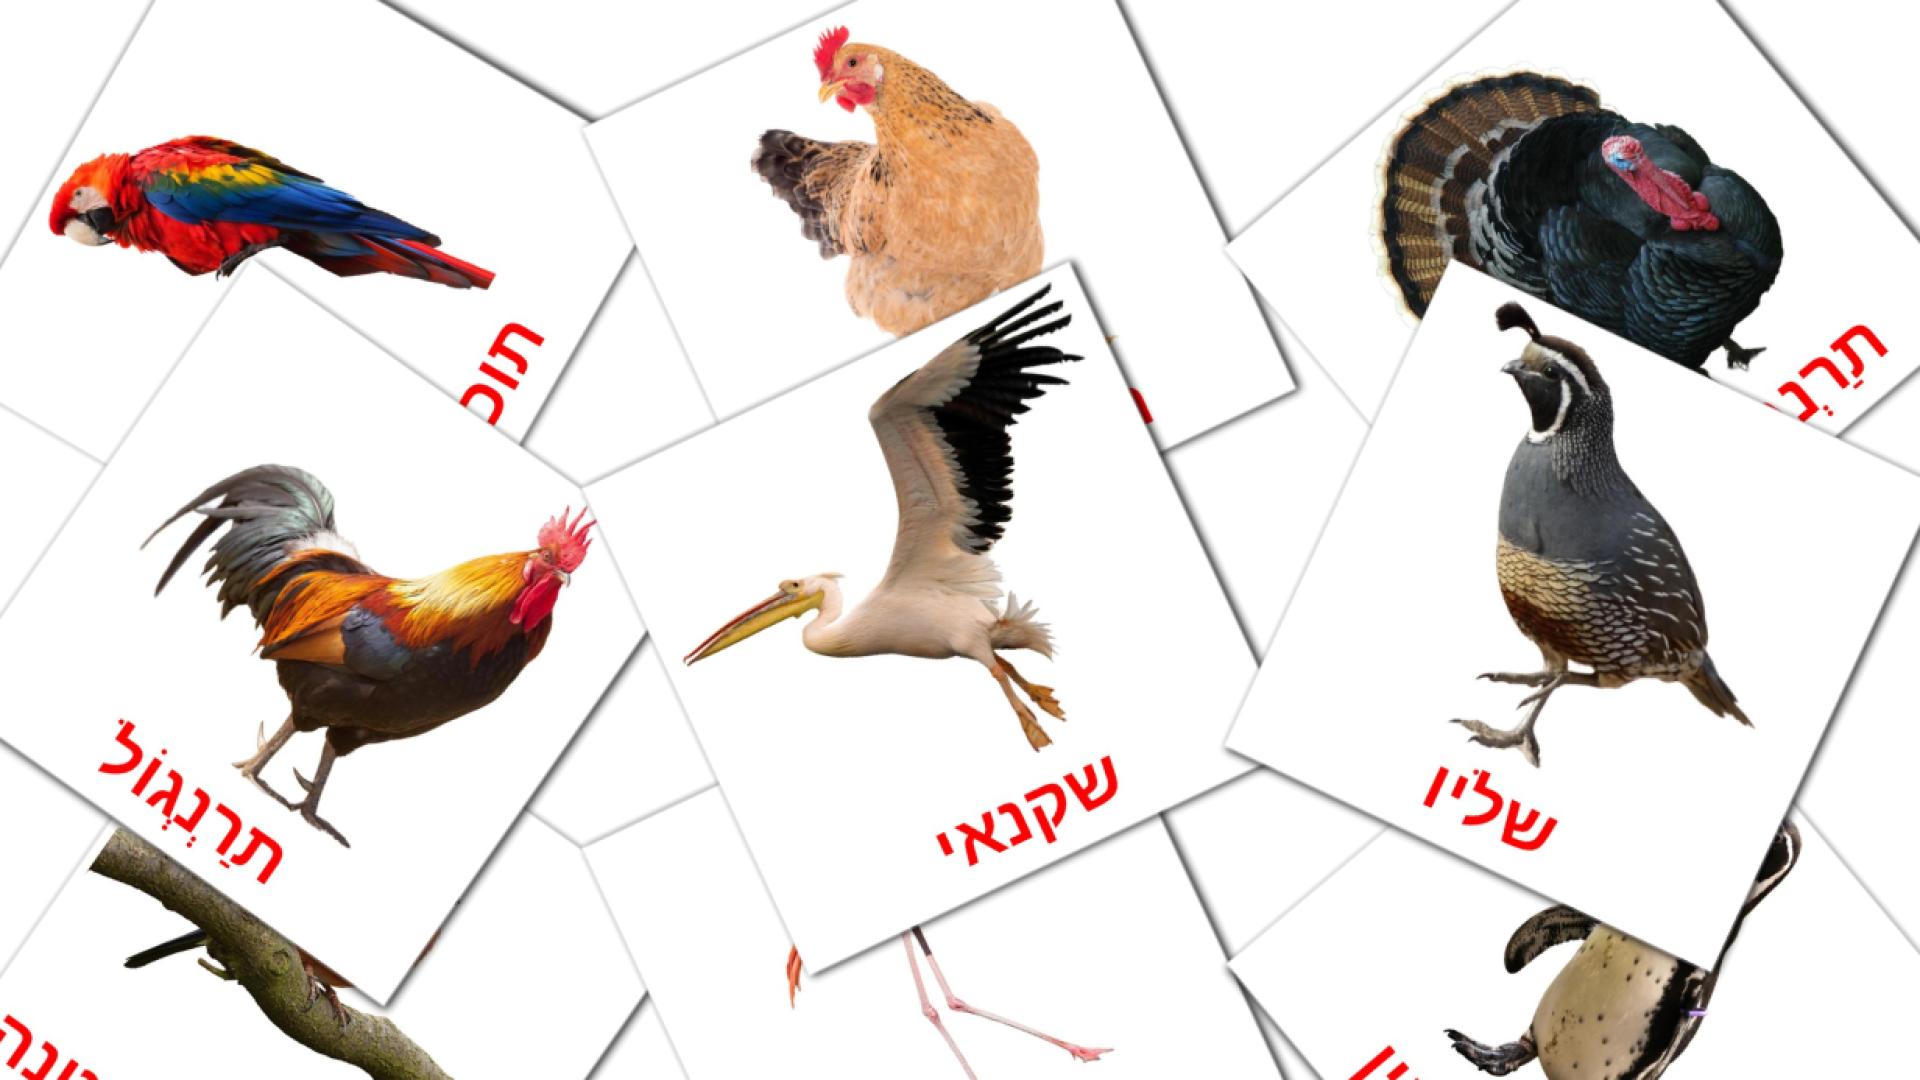 Hebräisch ציפוריםe Vokabelkarteikarten